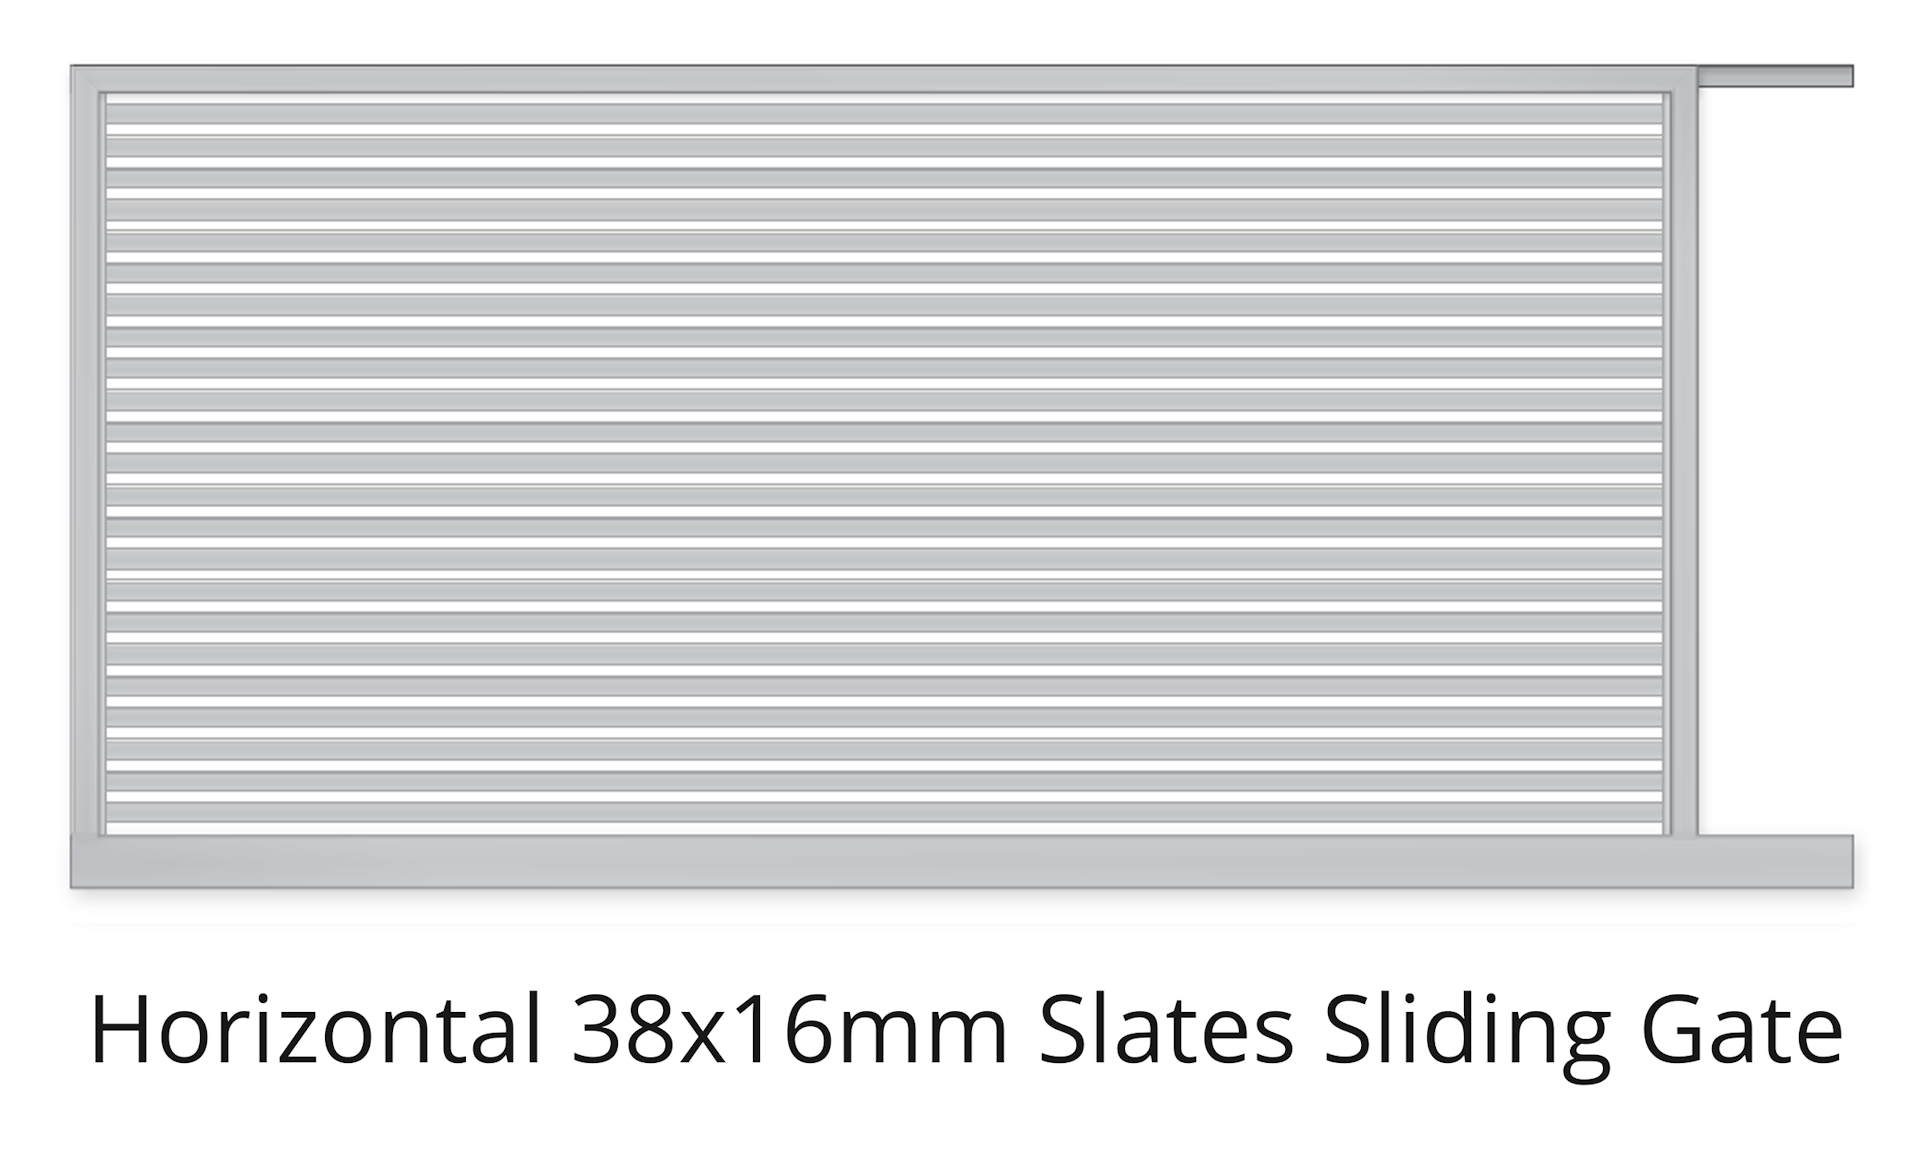 Horizontal 38x16mm slats sliding gate.